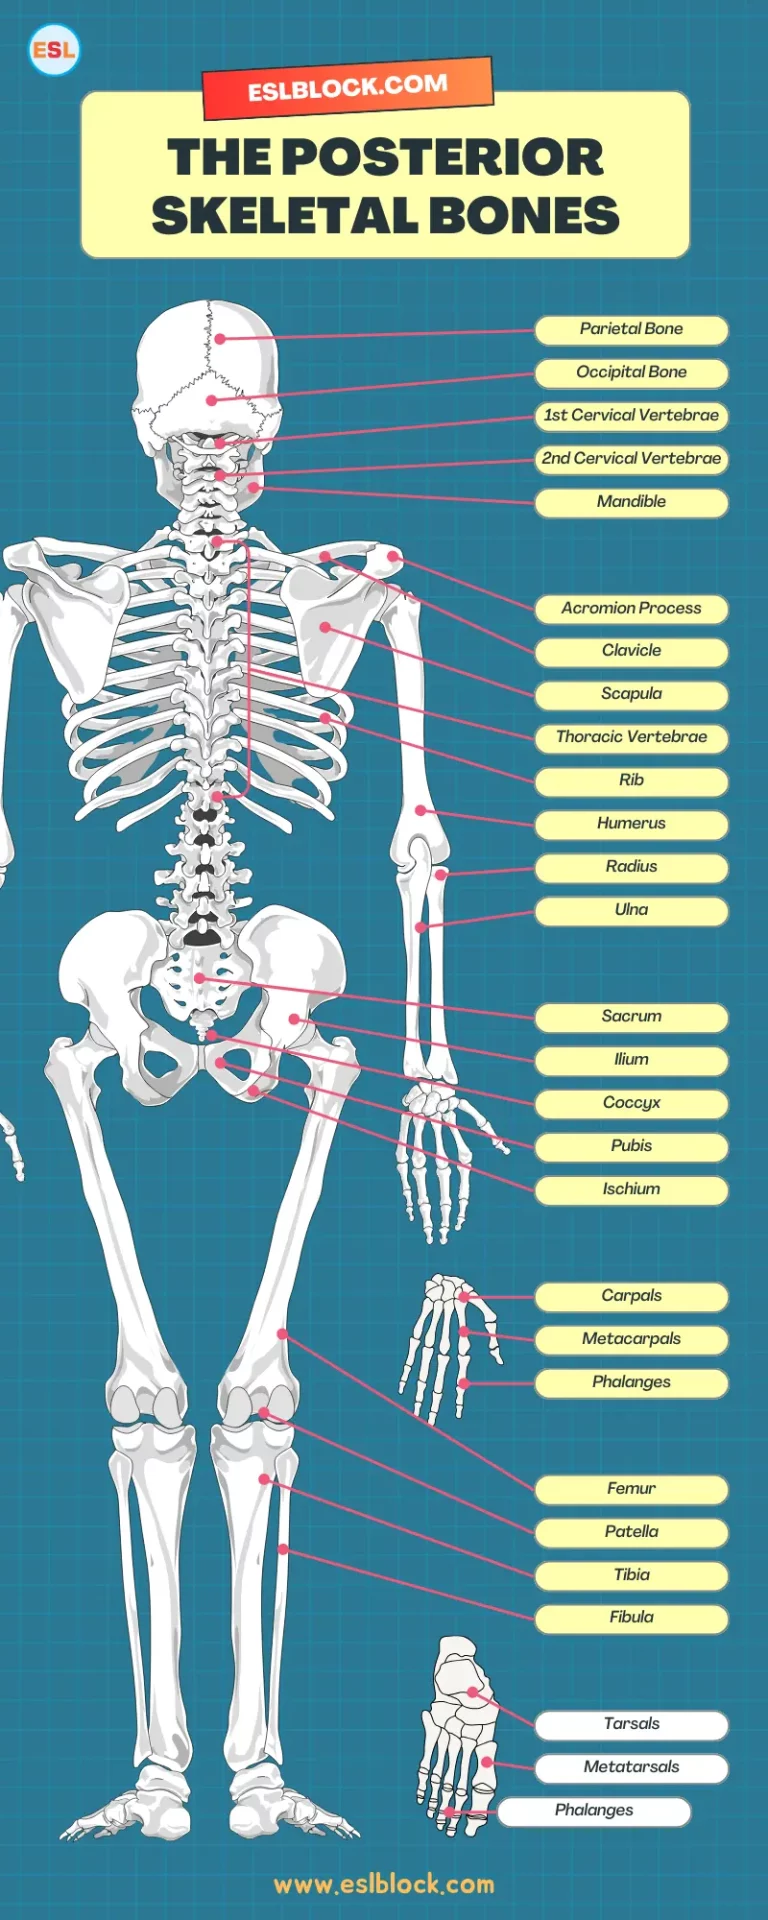 The Posterior Skeletal Bones